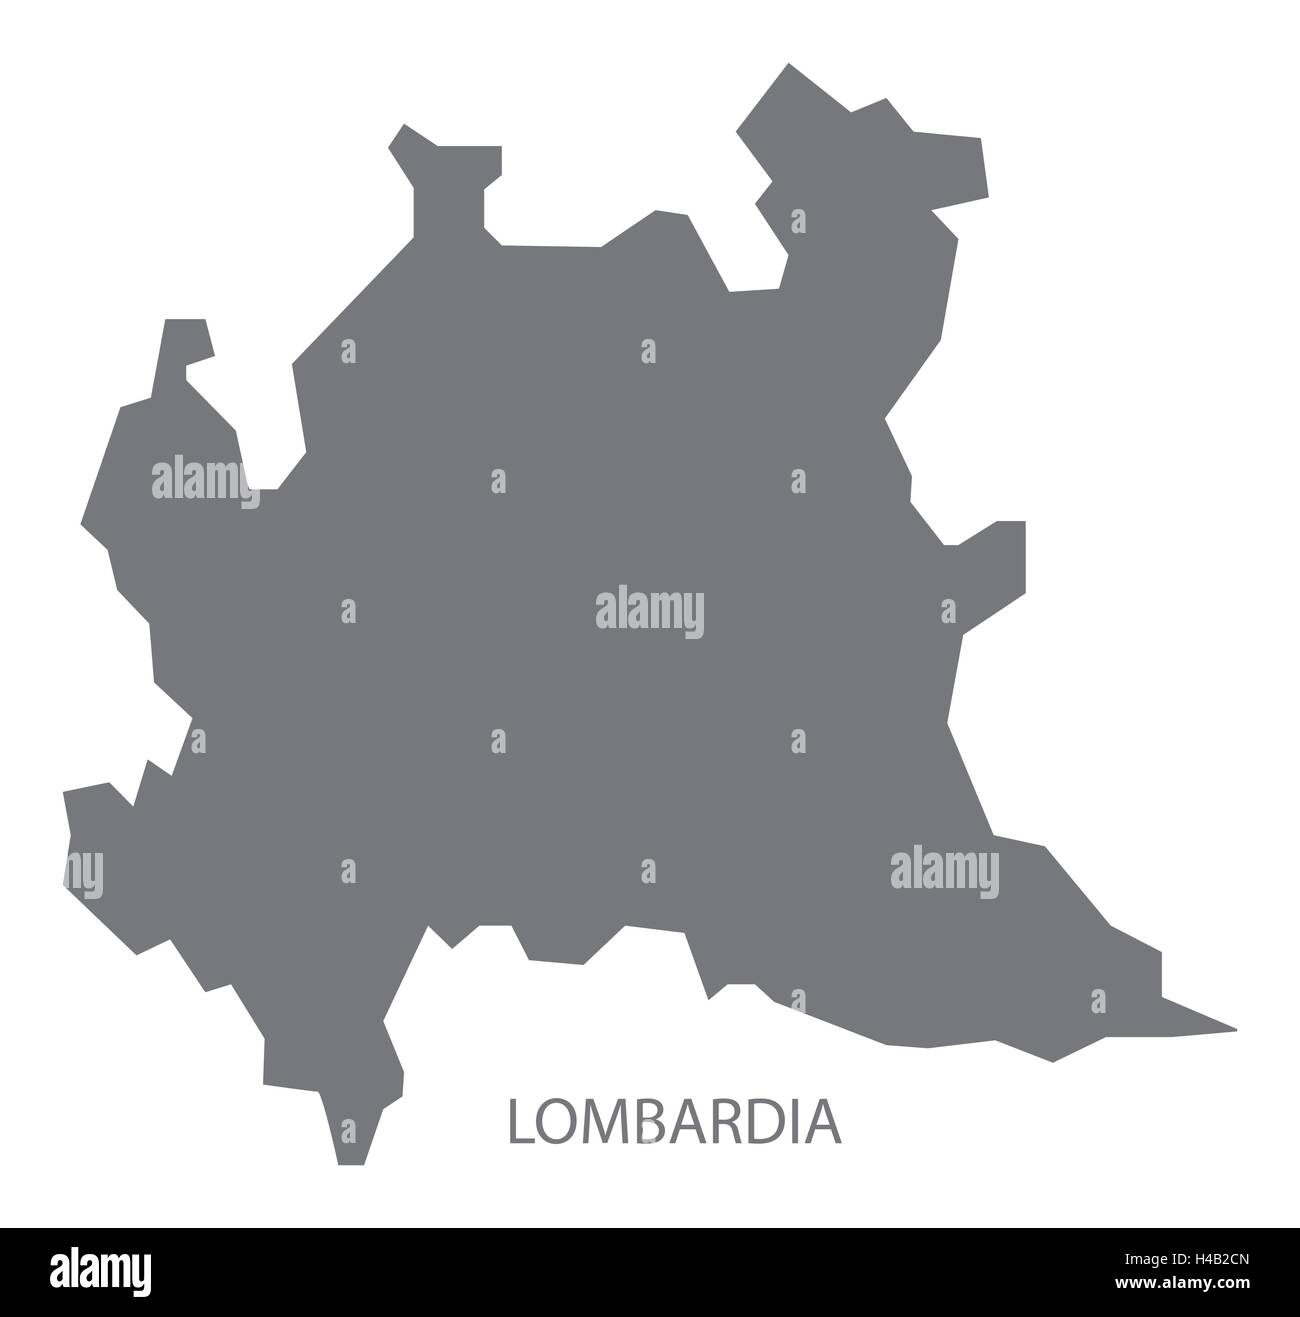 Lombardia Italy Map in grey Stock Vector